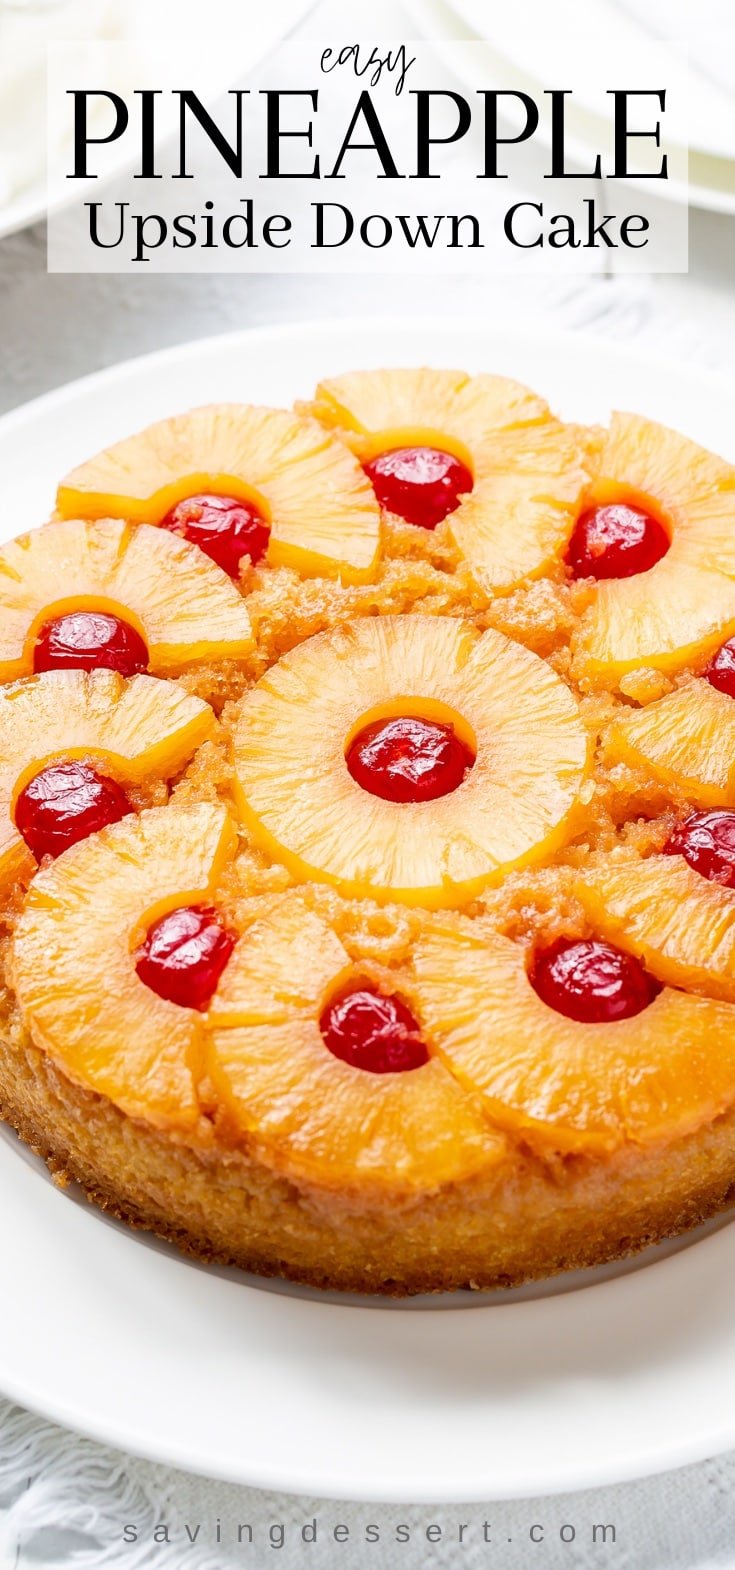 Pineapple Upside Down Cake on a platter